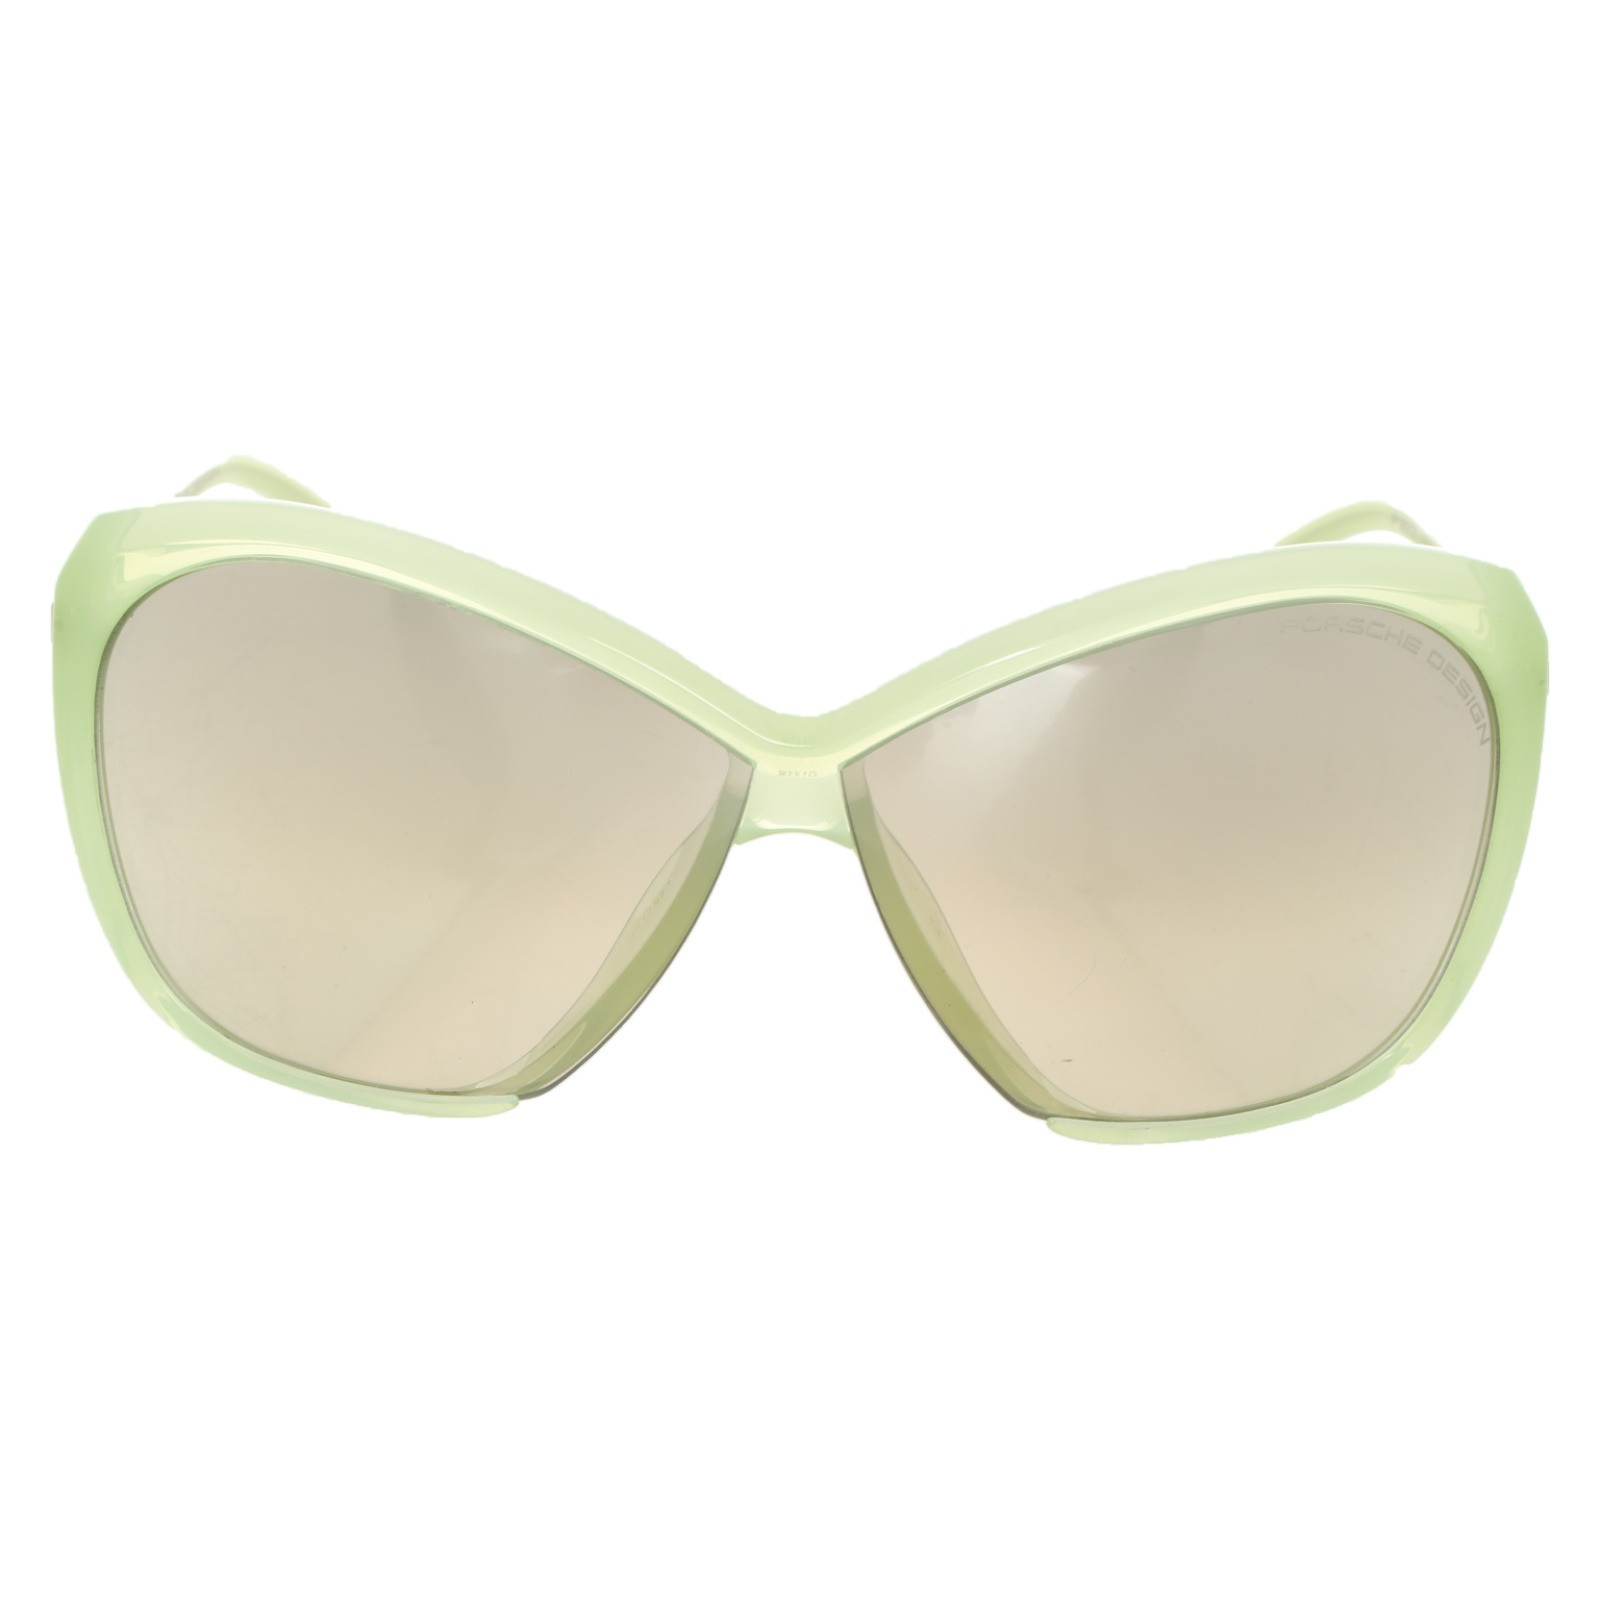 Porsche Design Sunglasses In Green Second Hand Porsche Design Sunglasses In Green Buy Used For 129